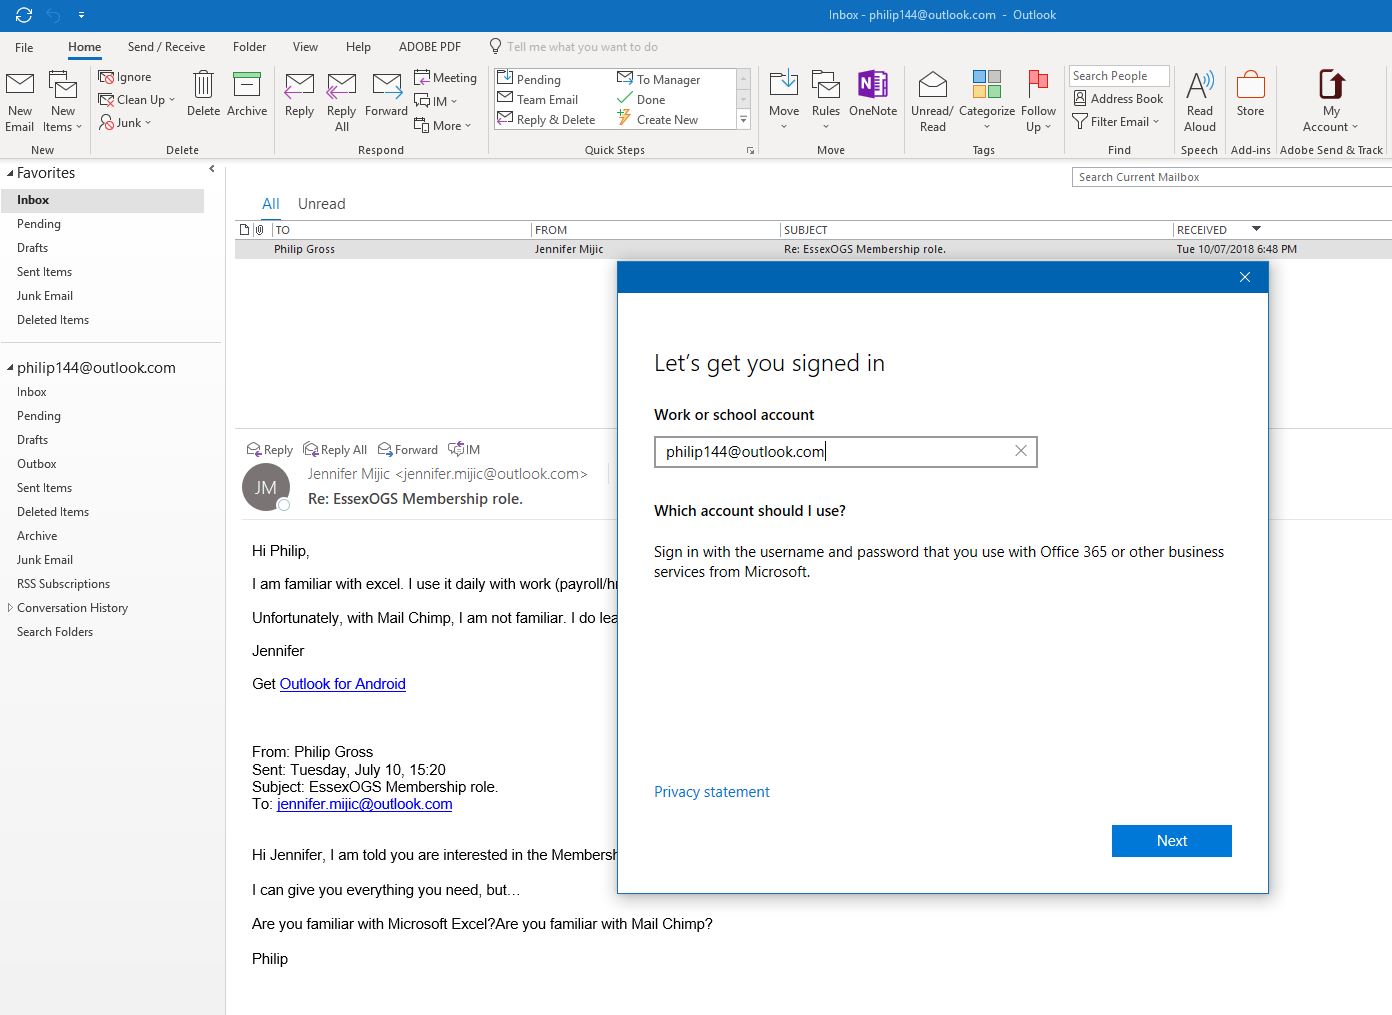 Office Outlook 365 login error - Microsoft Community
